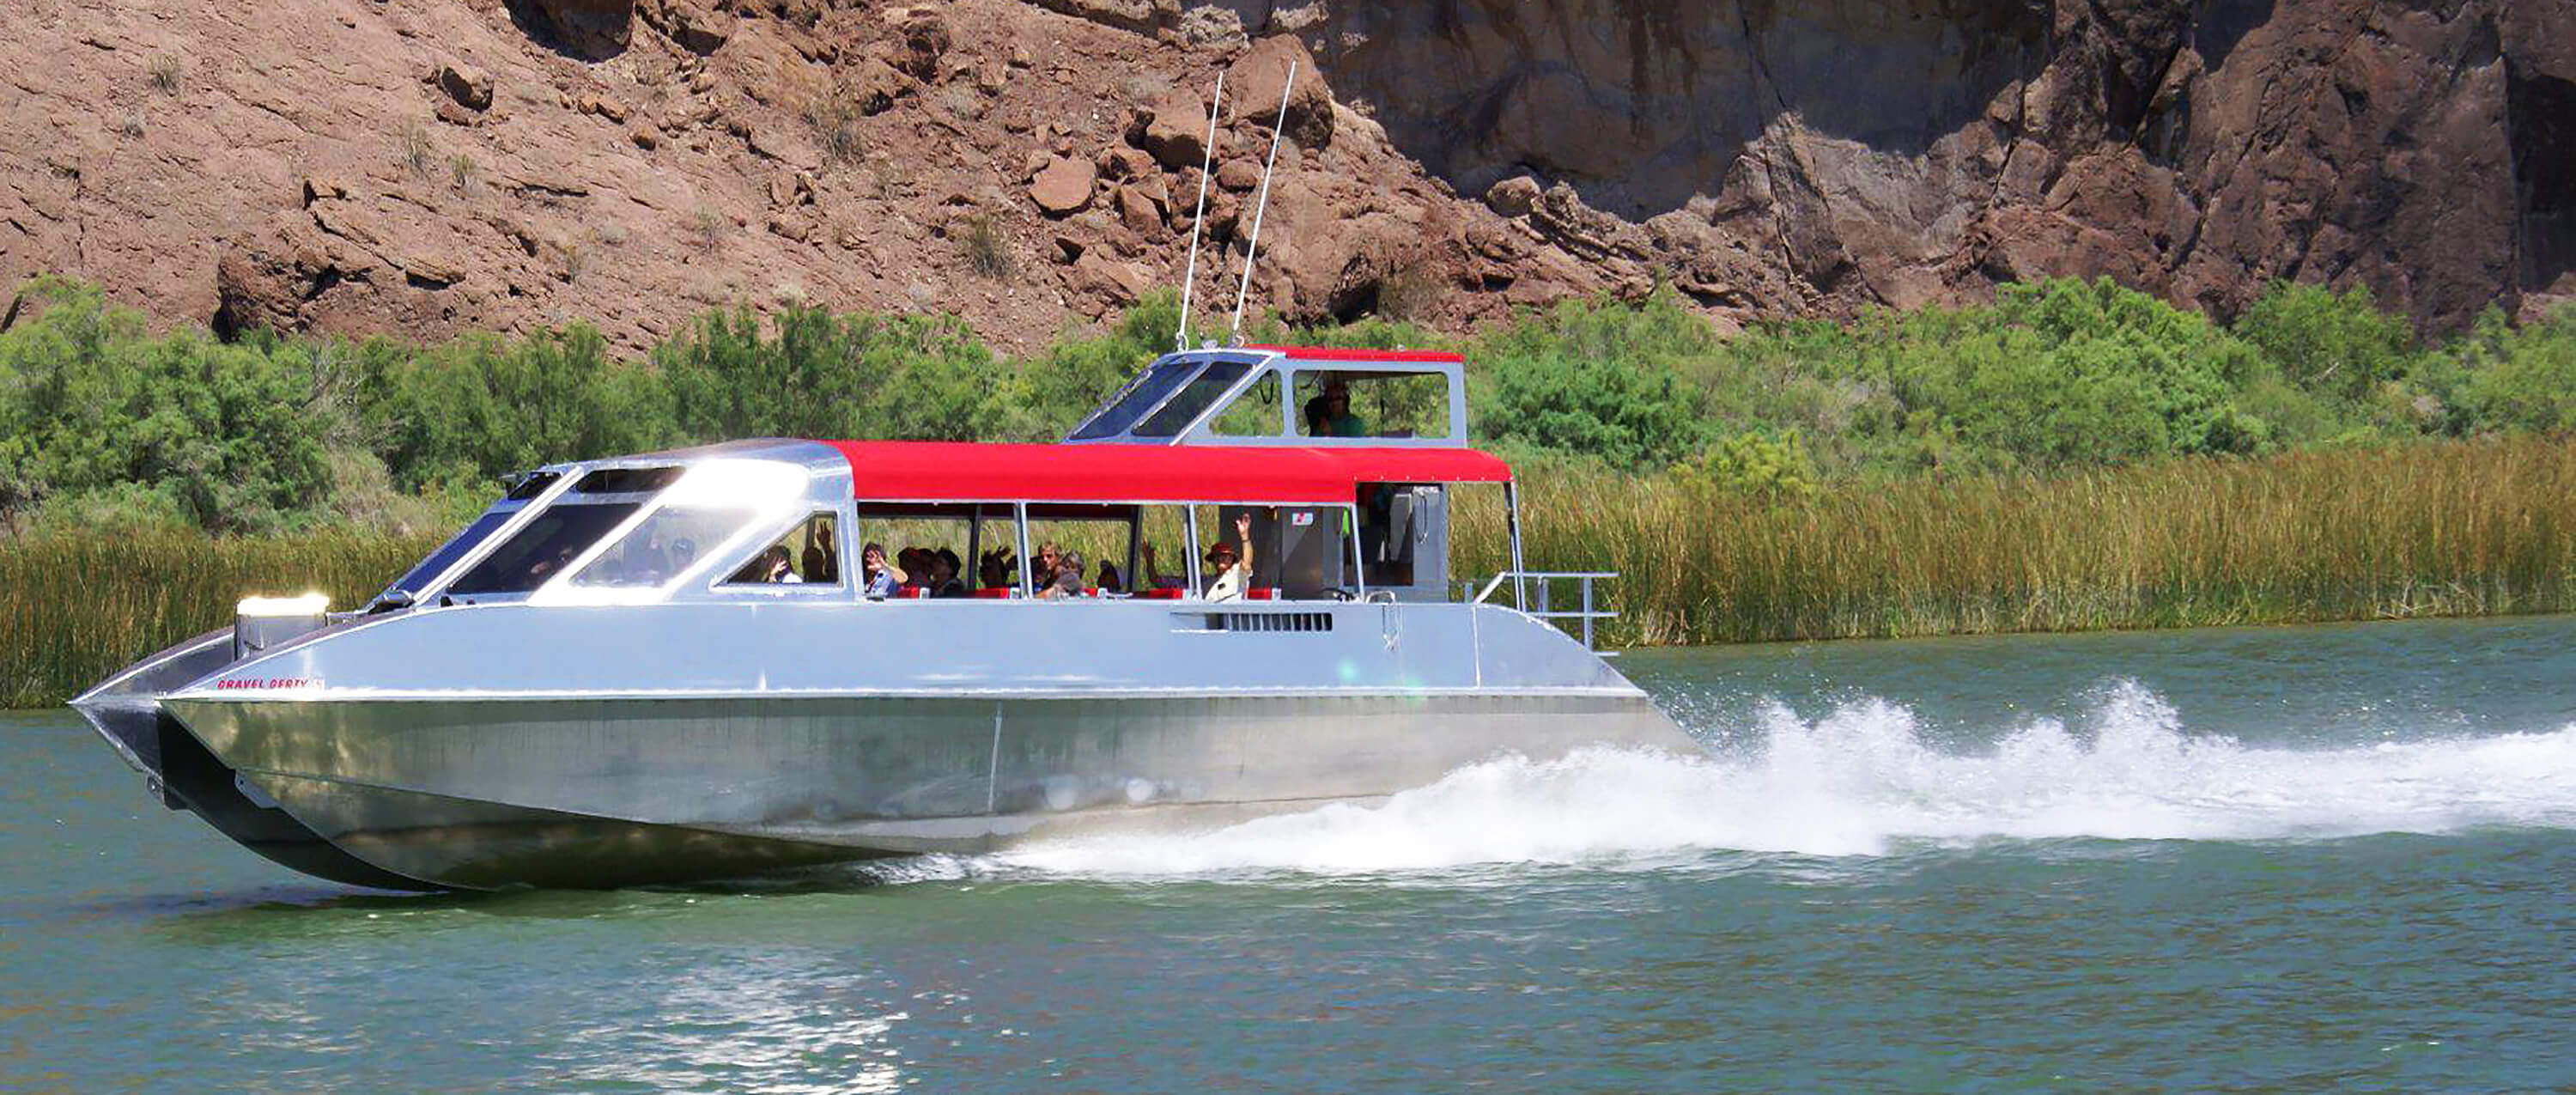 boat tours in denver colorado